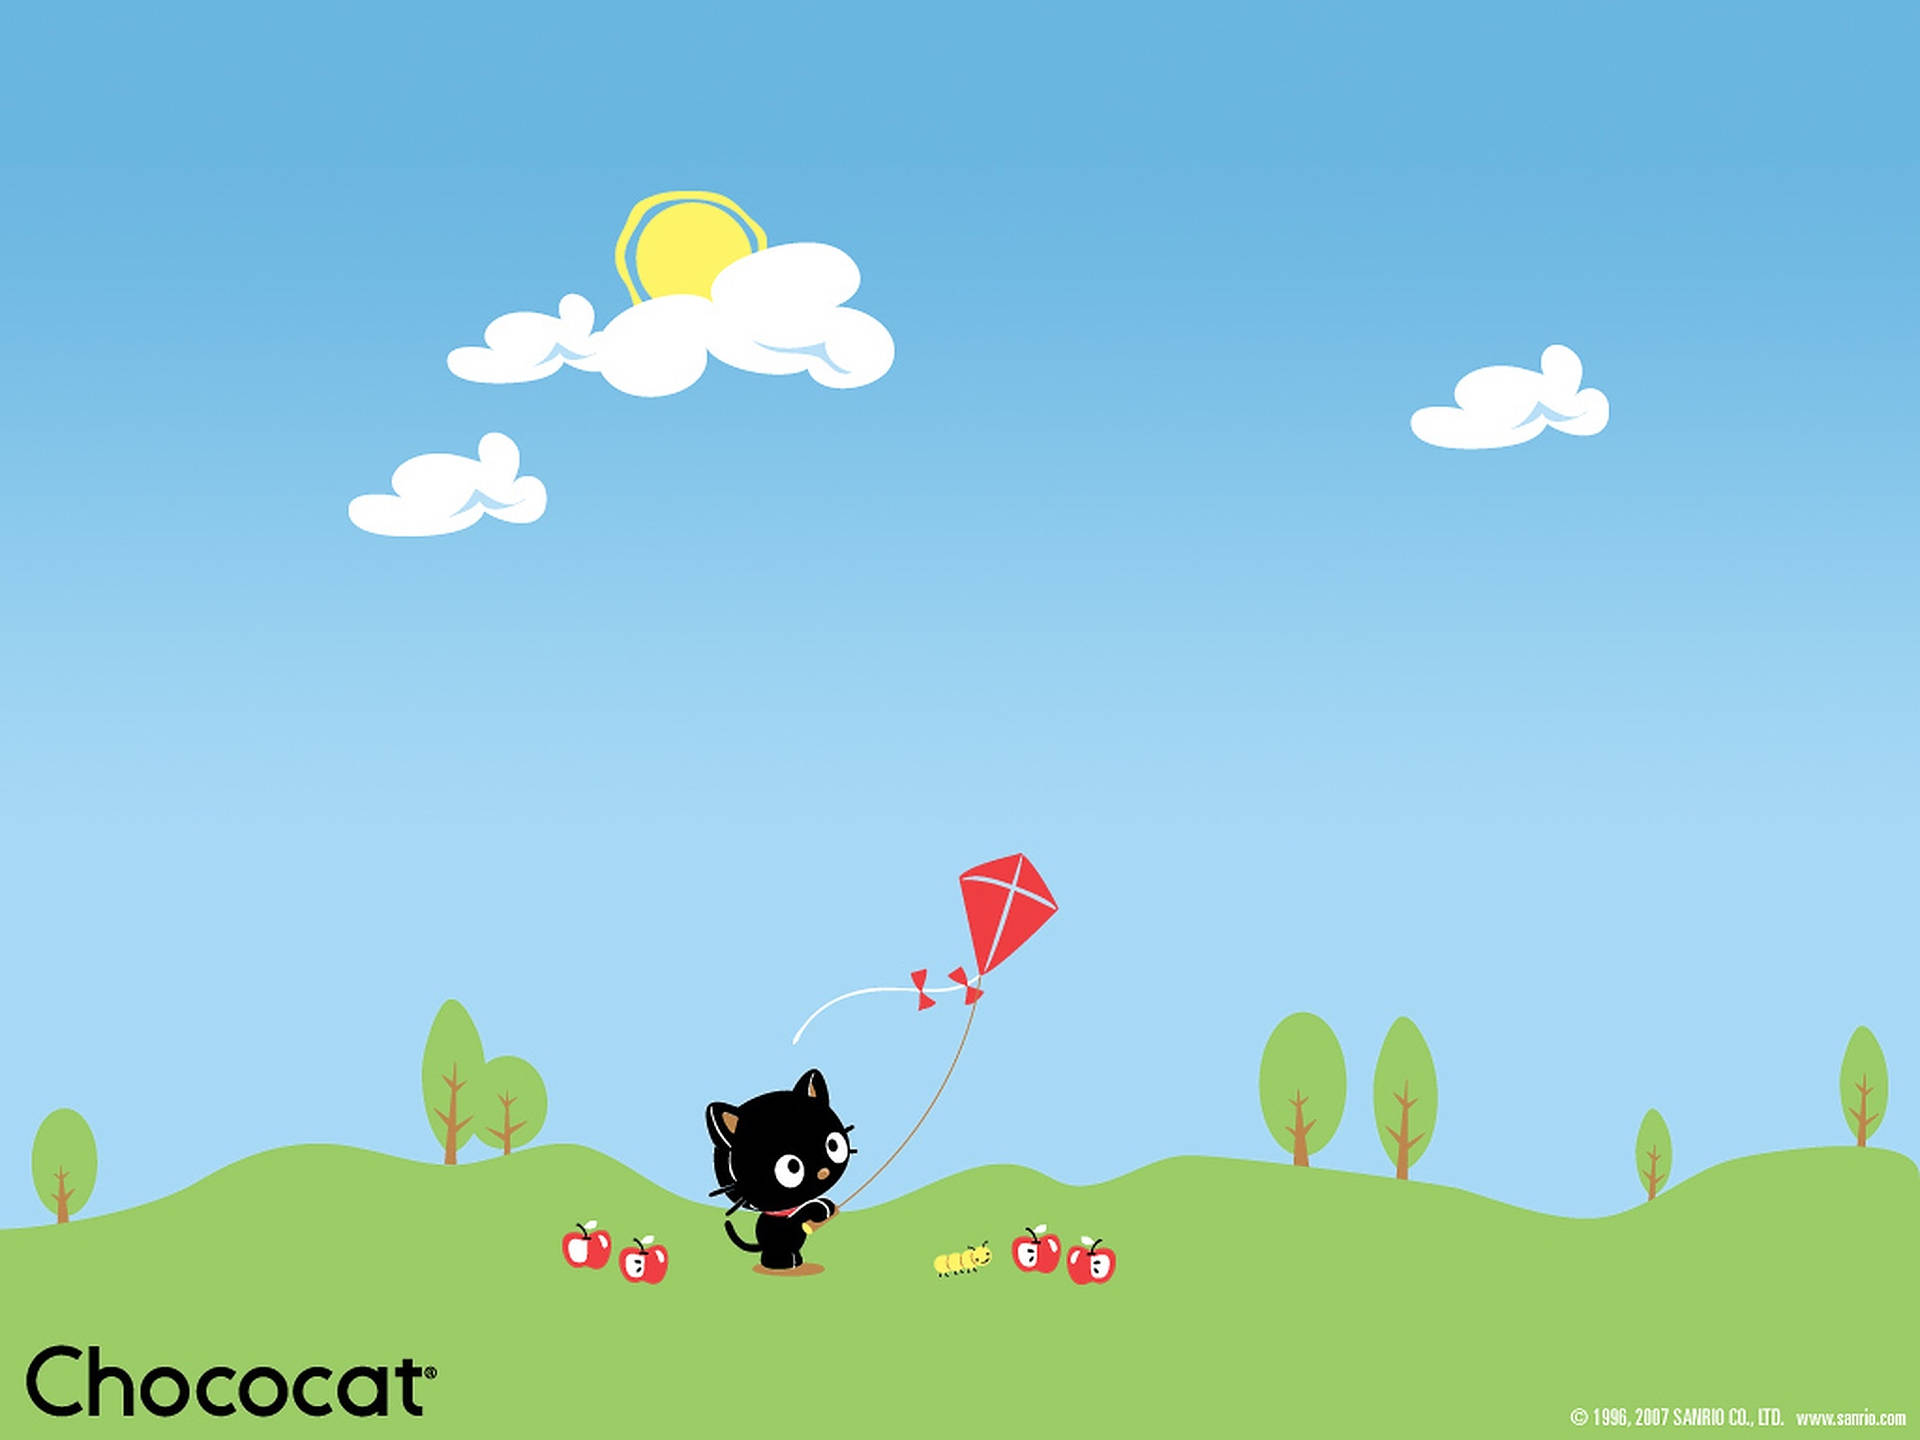 Chococat Flying A Kite Background